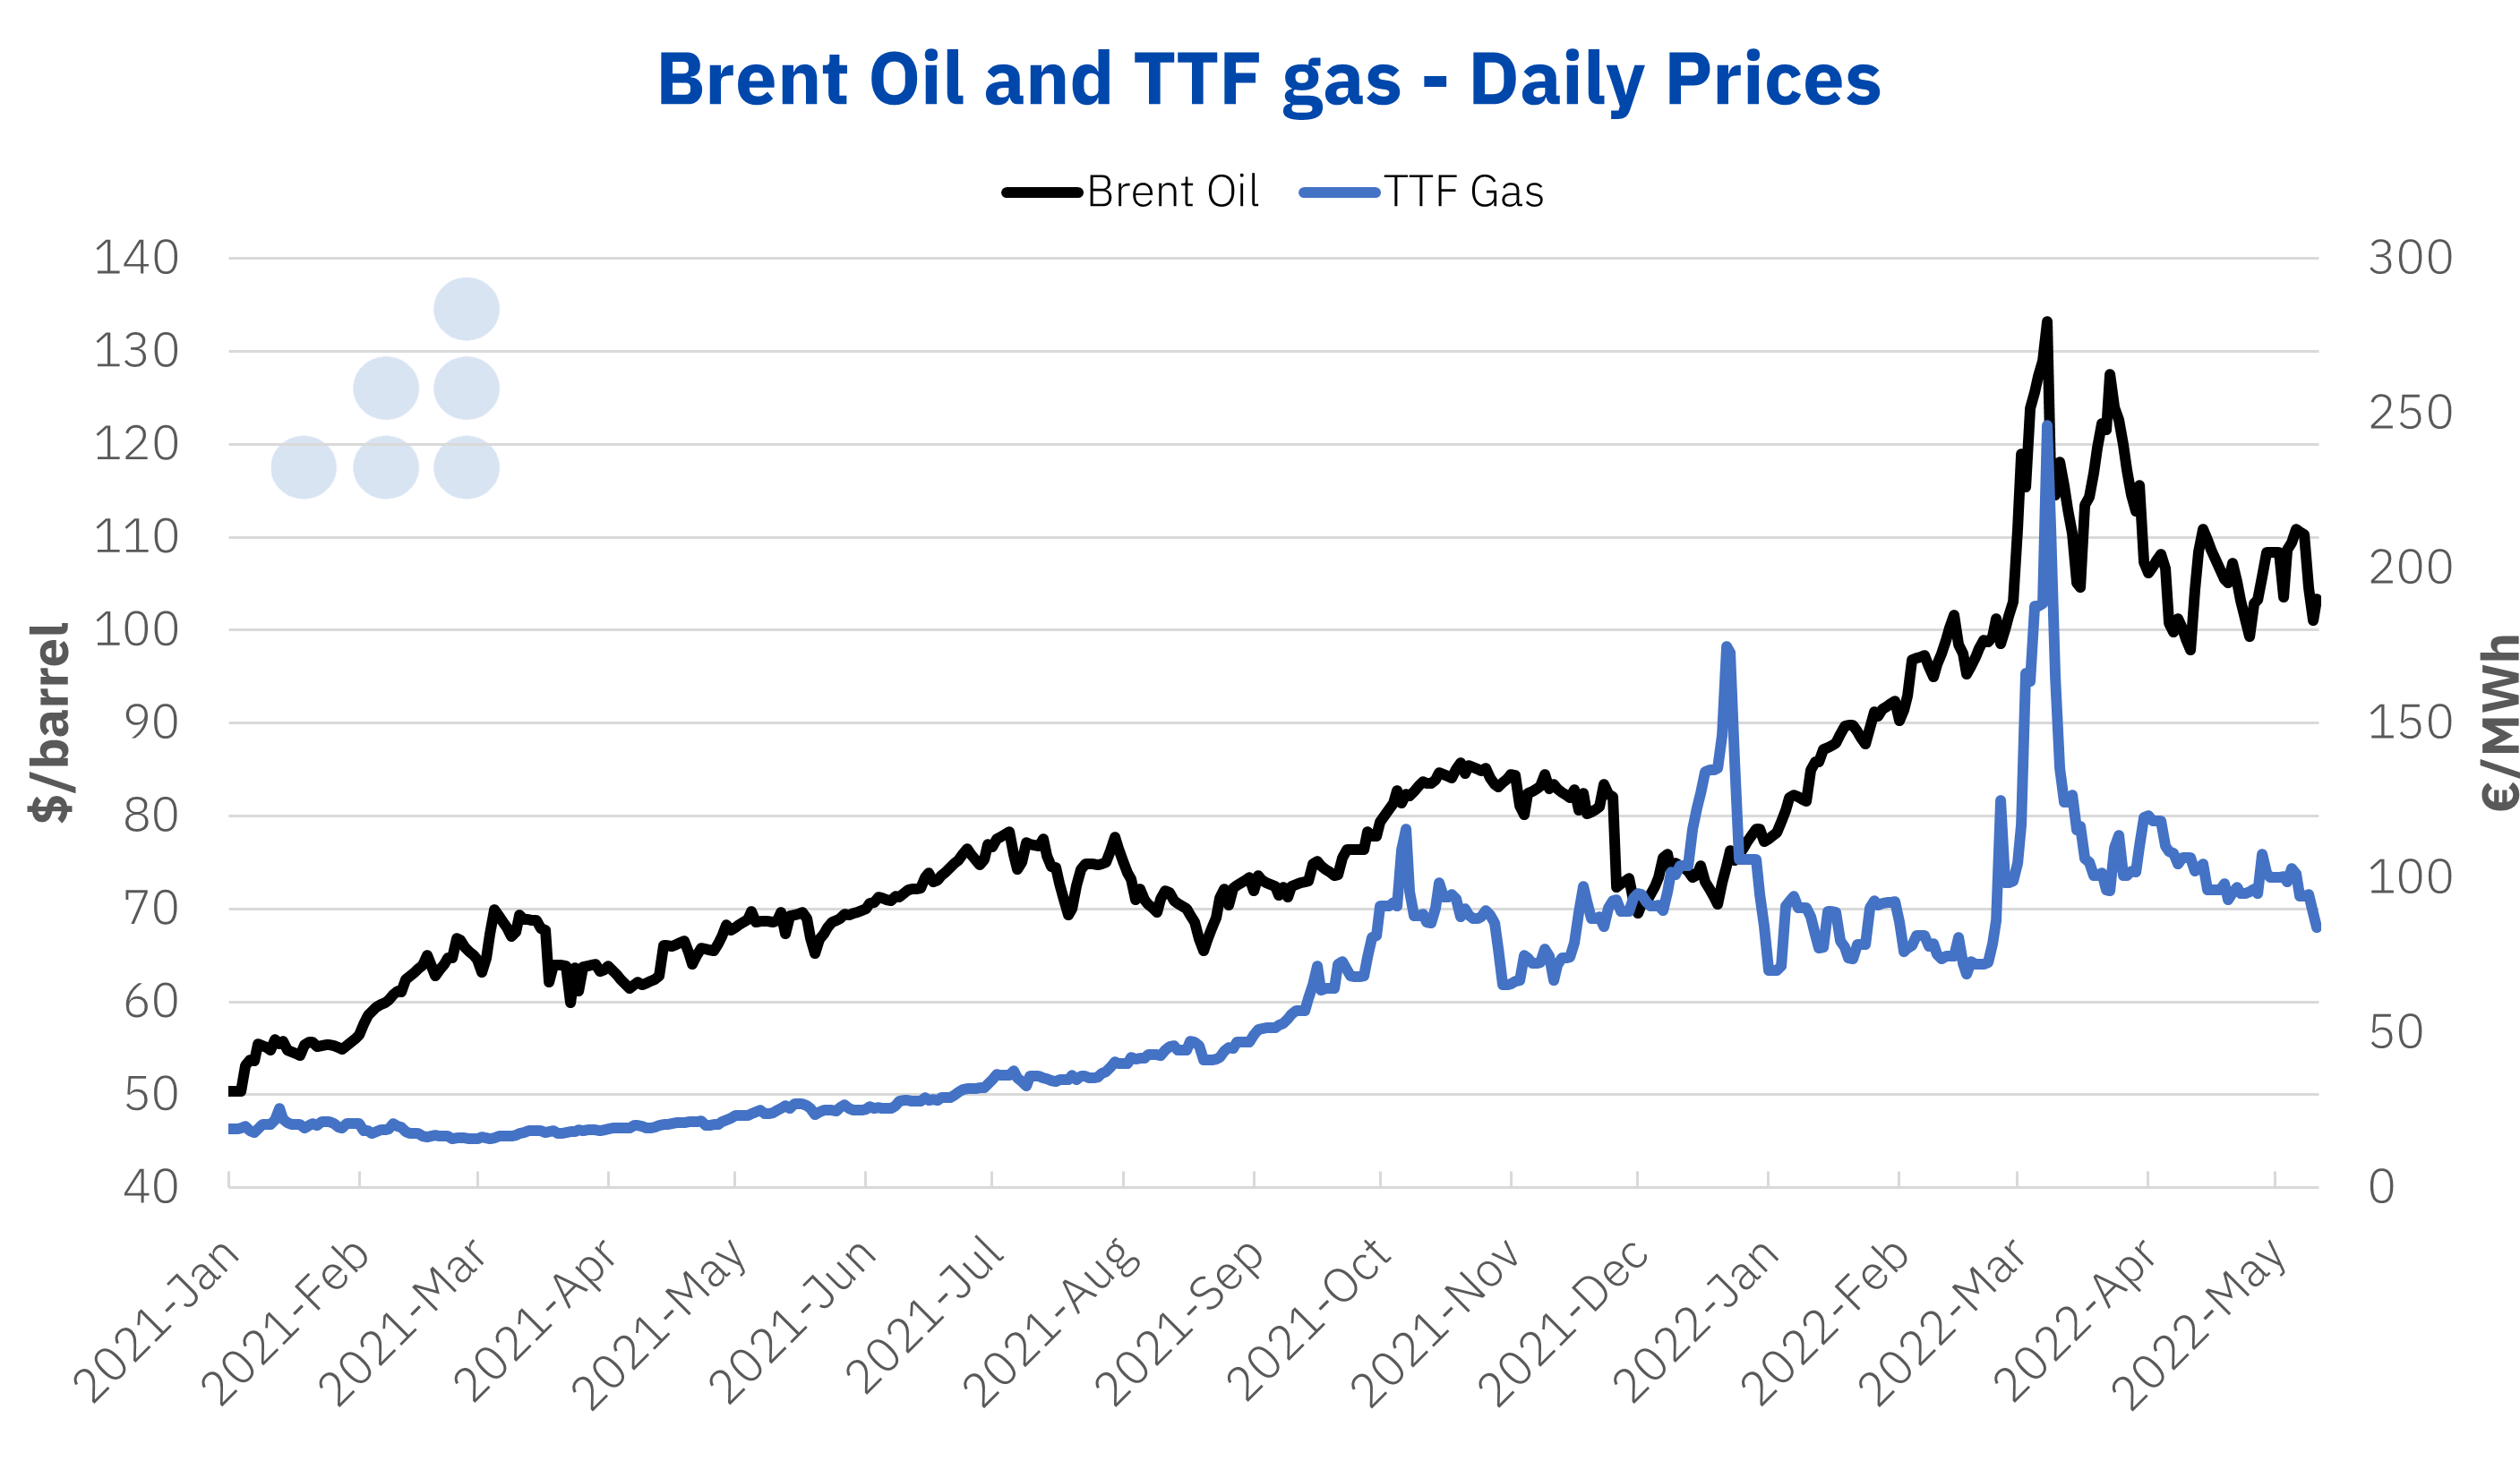 AleaSoft - Brent oil TTF gas prices